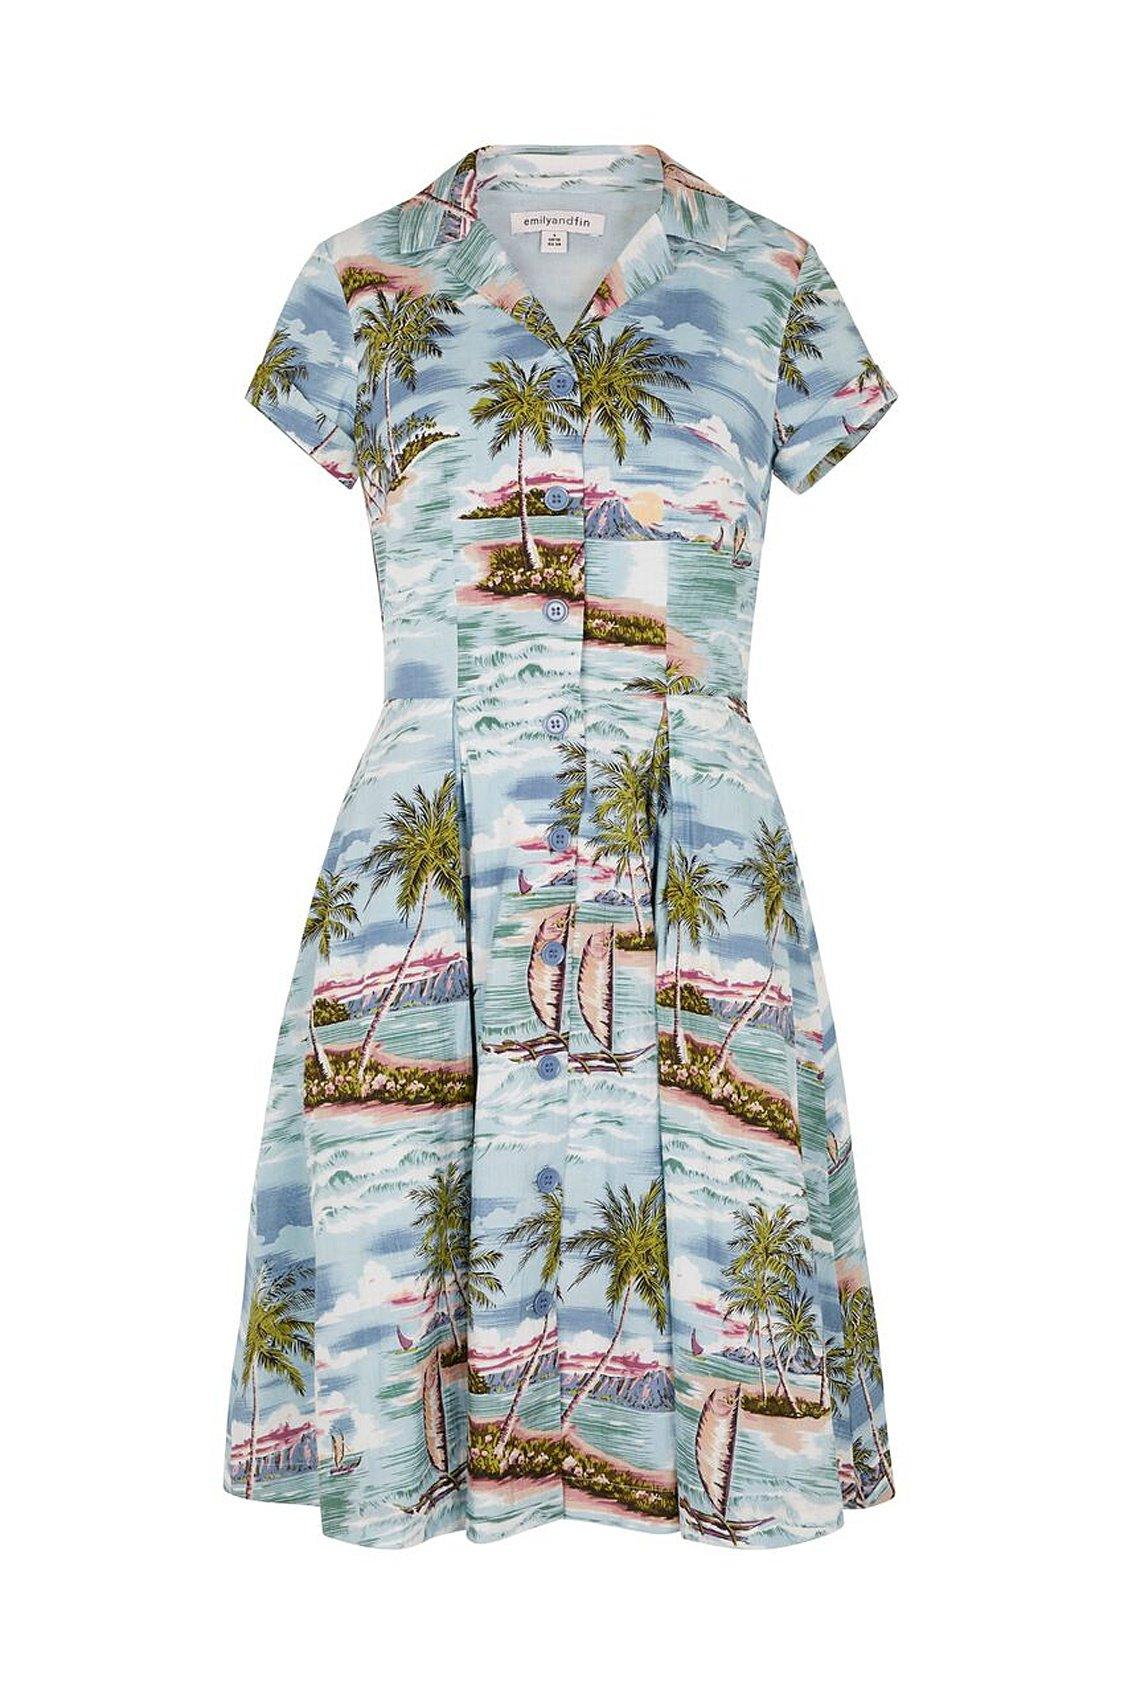 Kate Paradise Island Shirt Dress Emily & Fin - BouChic 